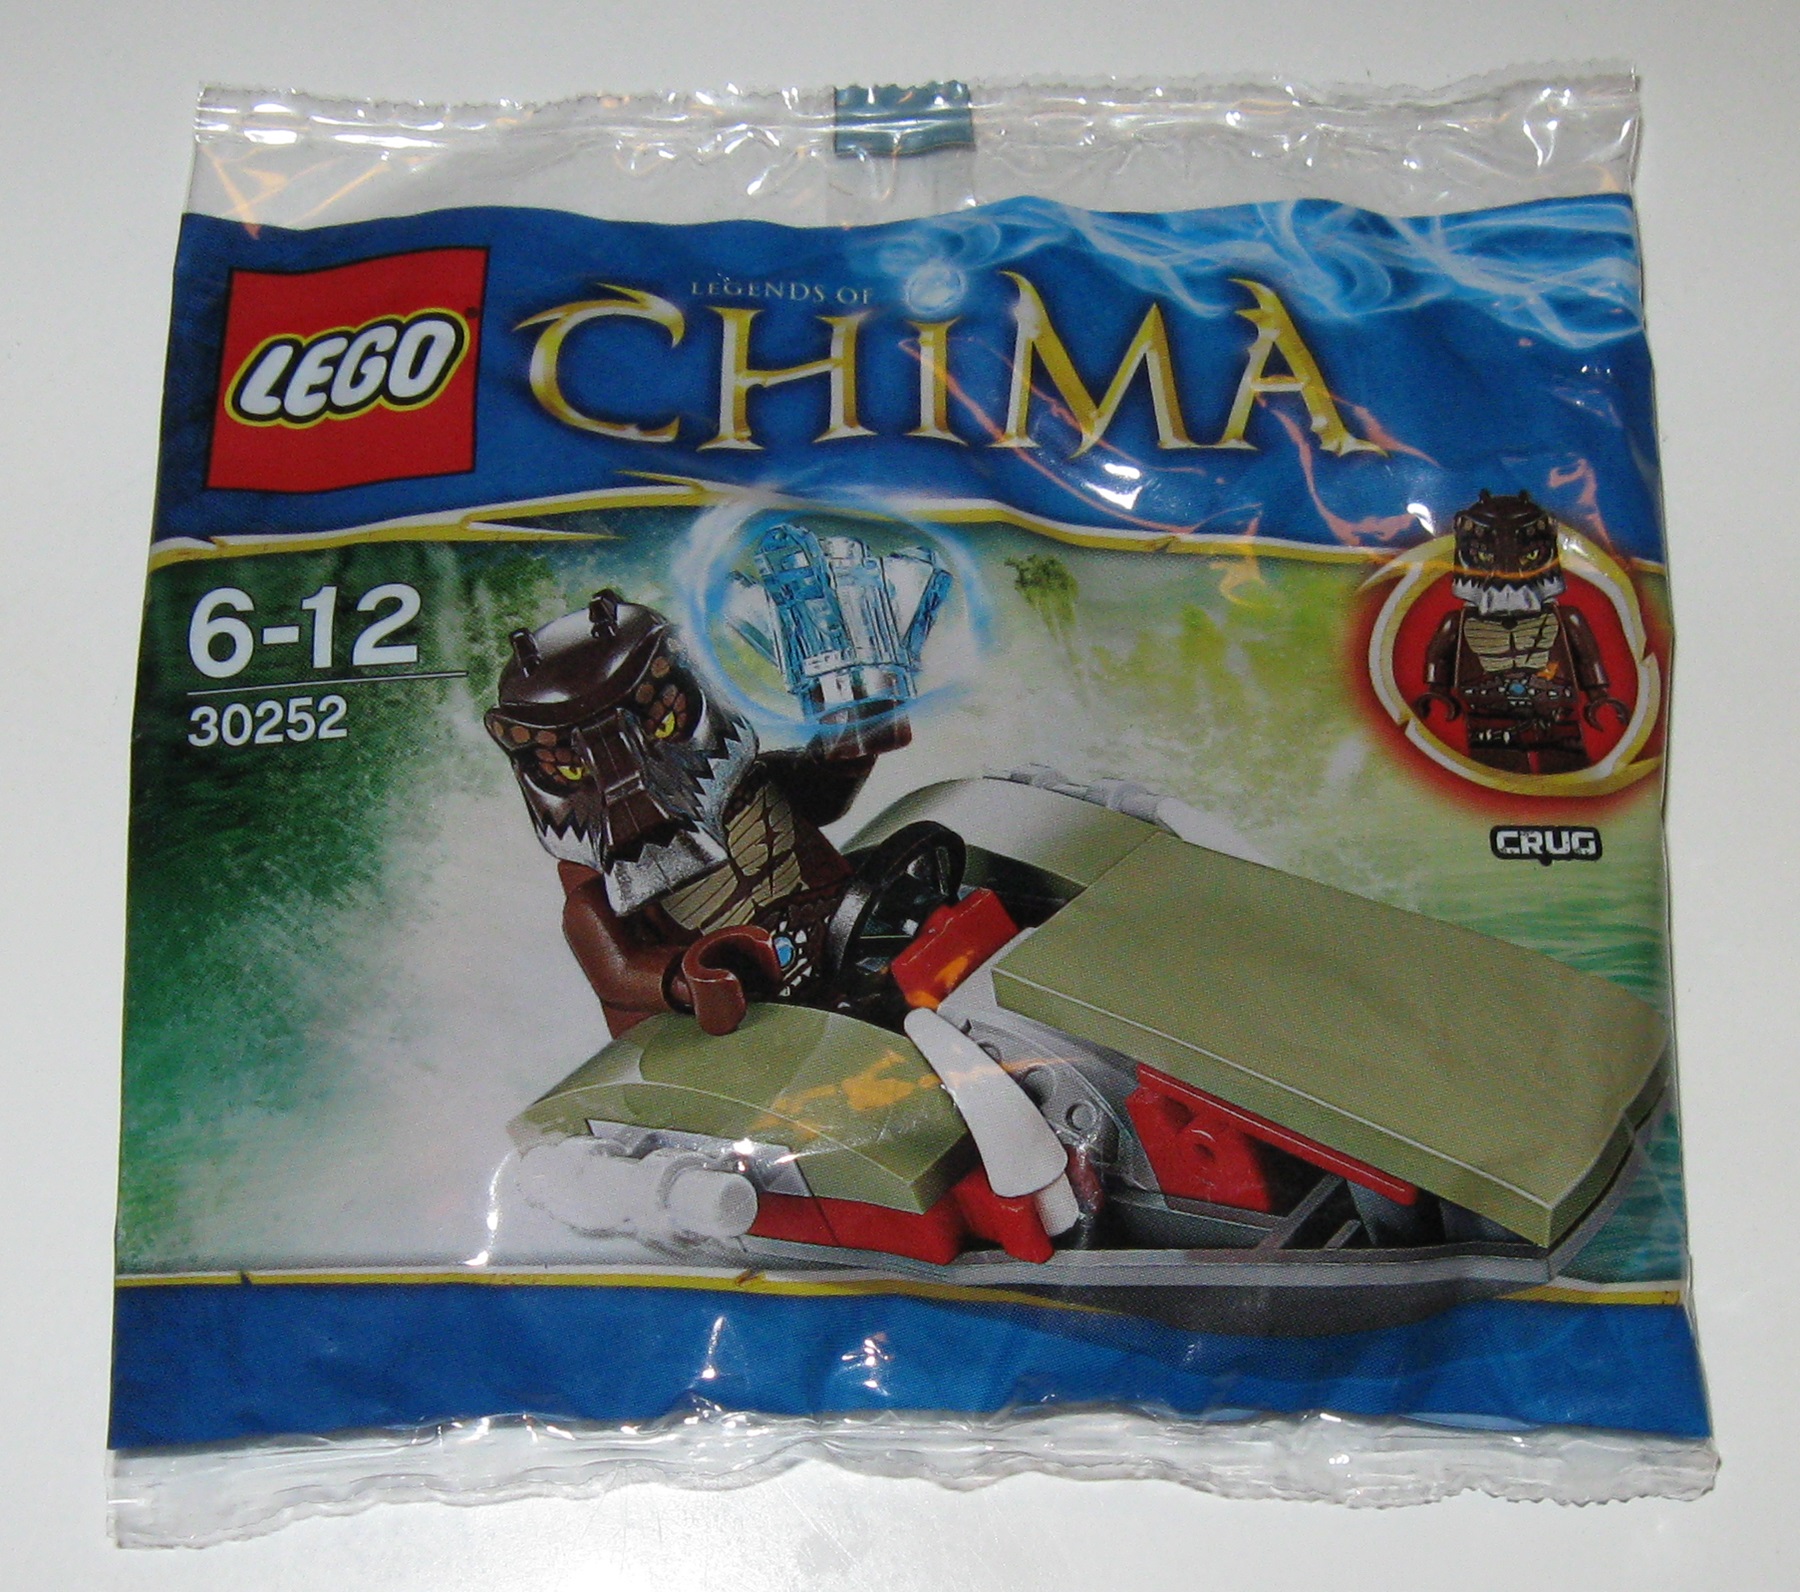 0030 Lego Chima 30252